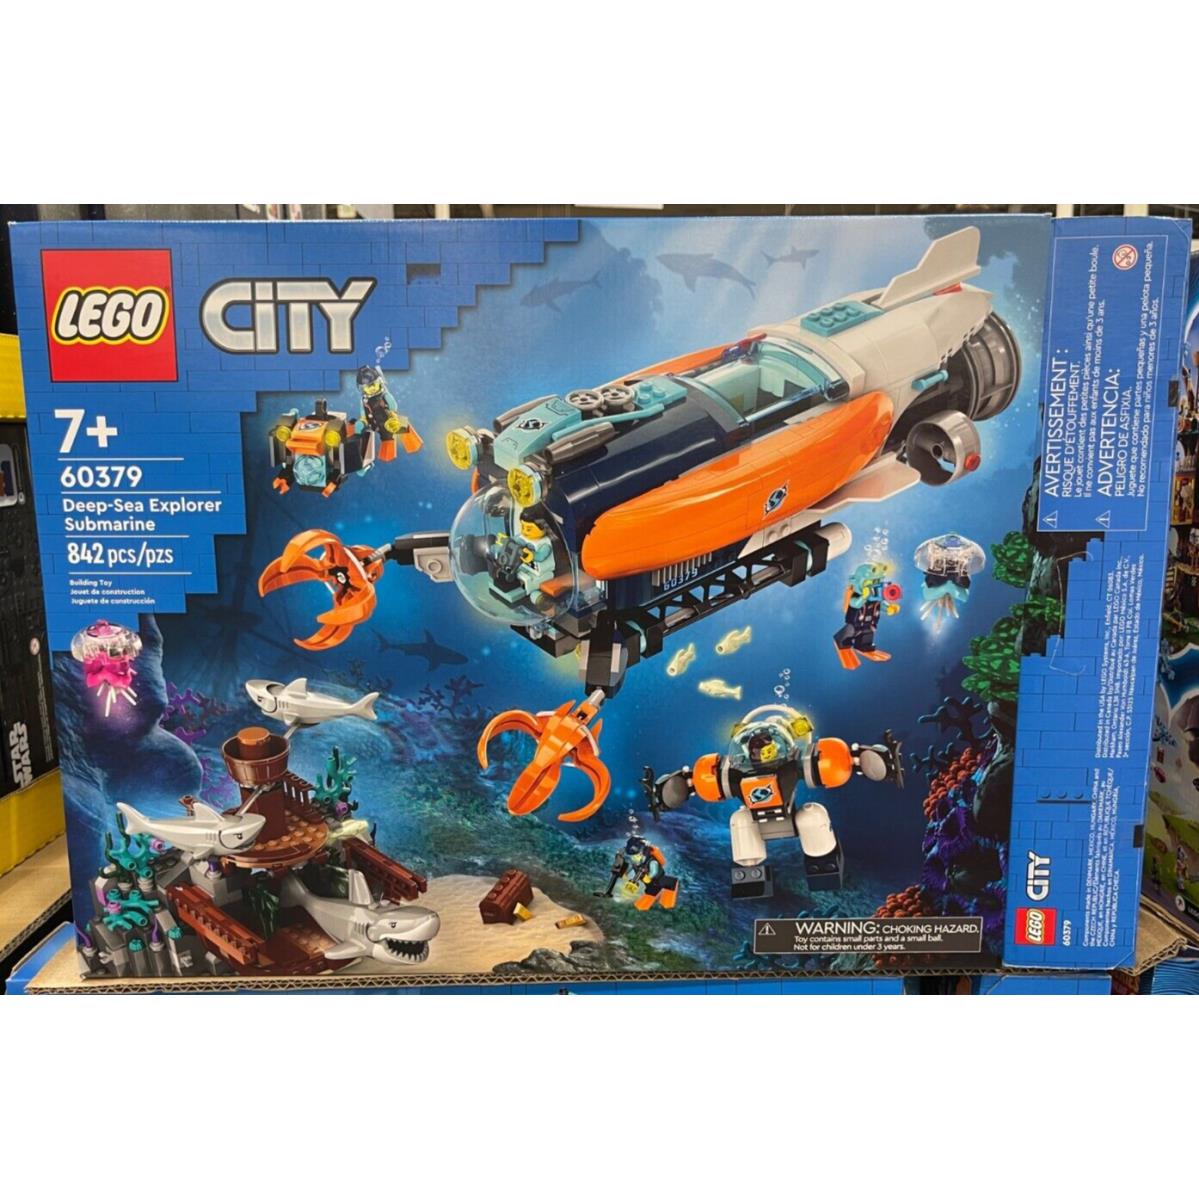 Lego City Deep-sea Explorer Submarine 60379 Building Toy Set Ocean Sub Playset